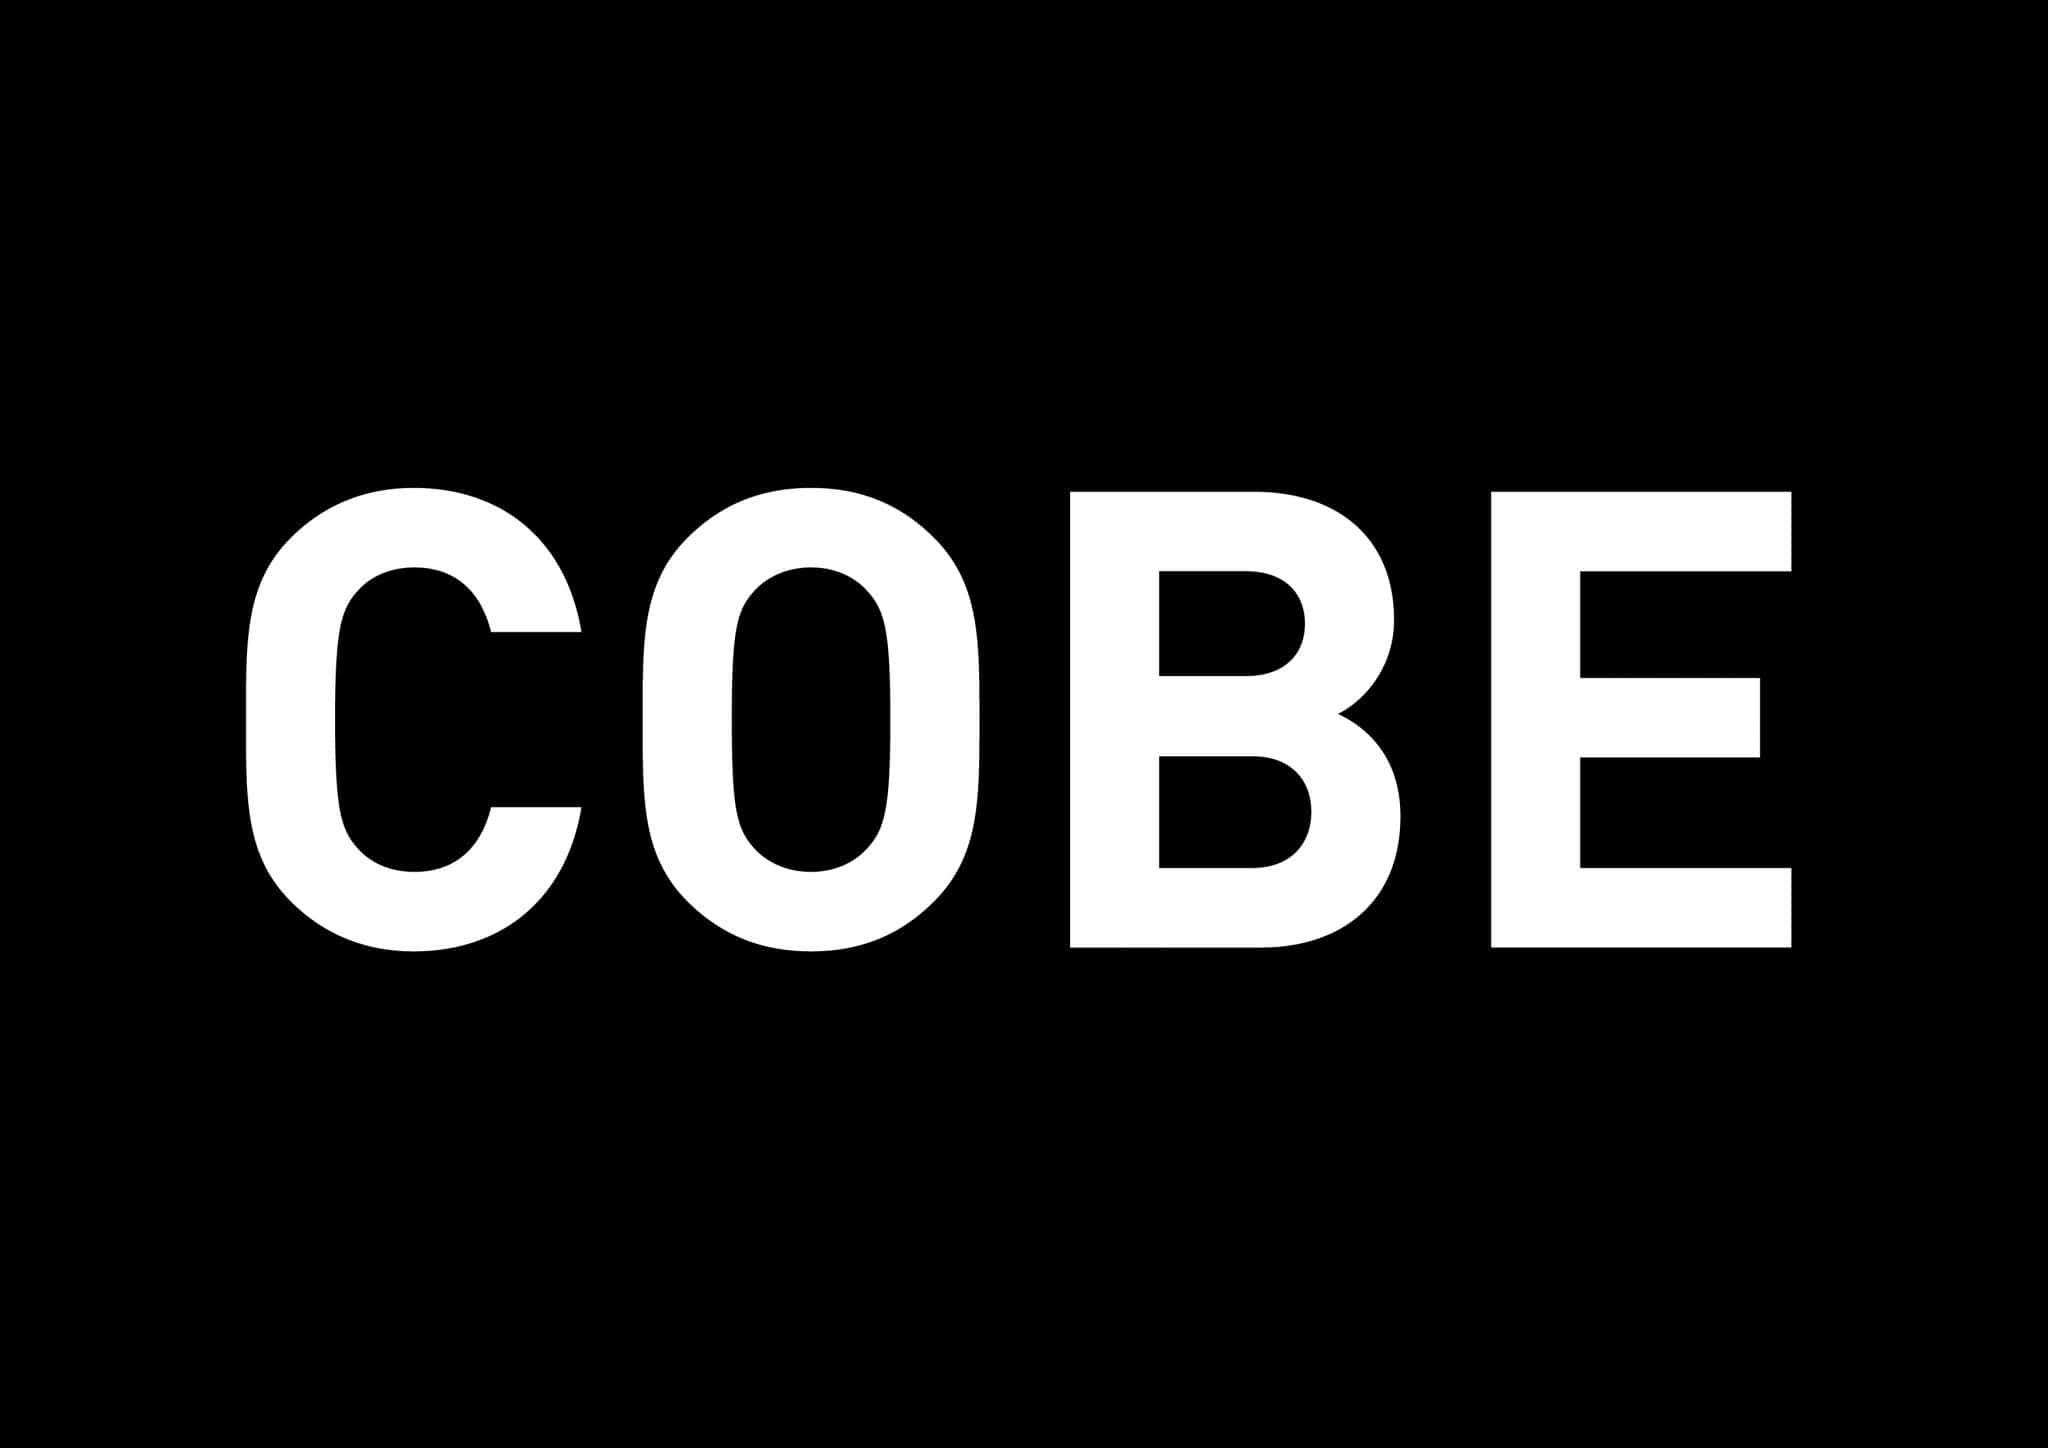 Cobe Logo - COBE - arcspace.com